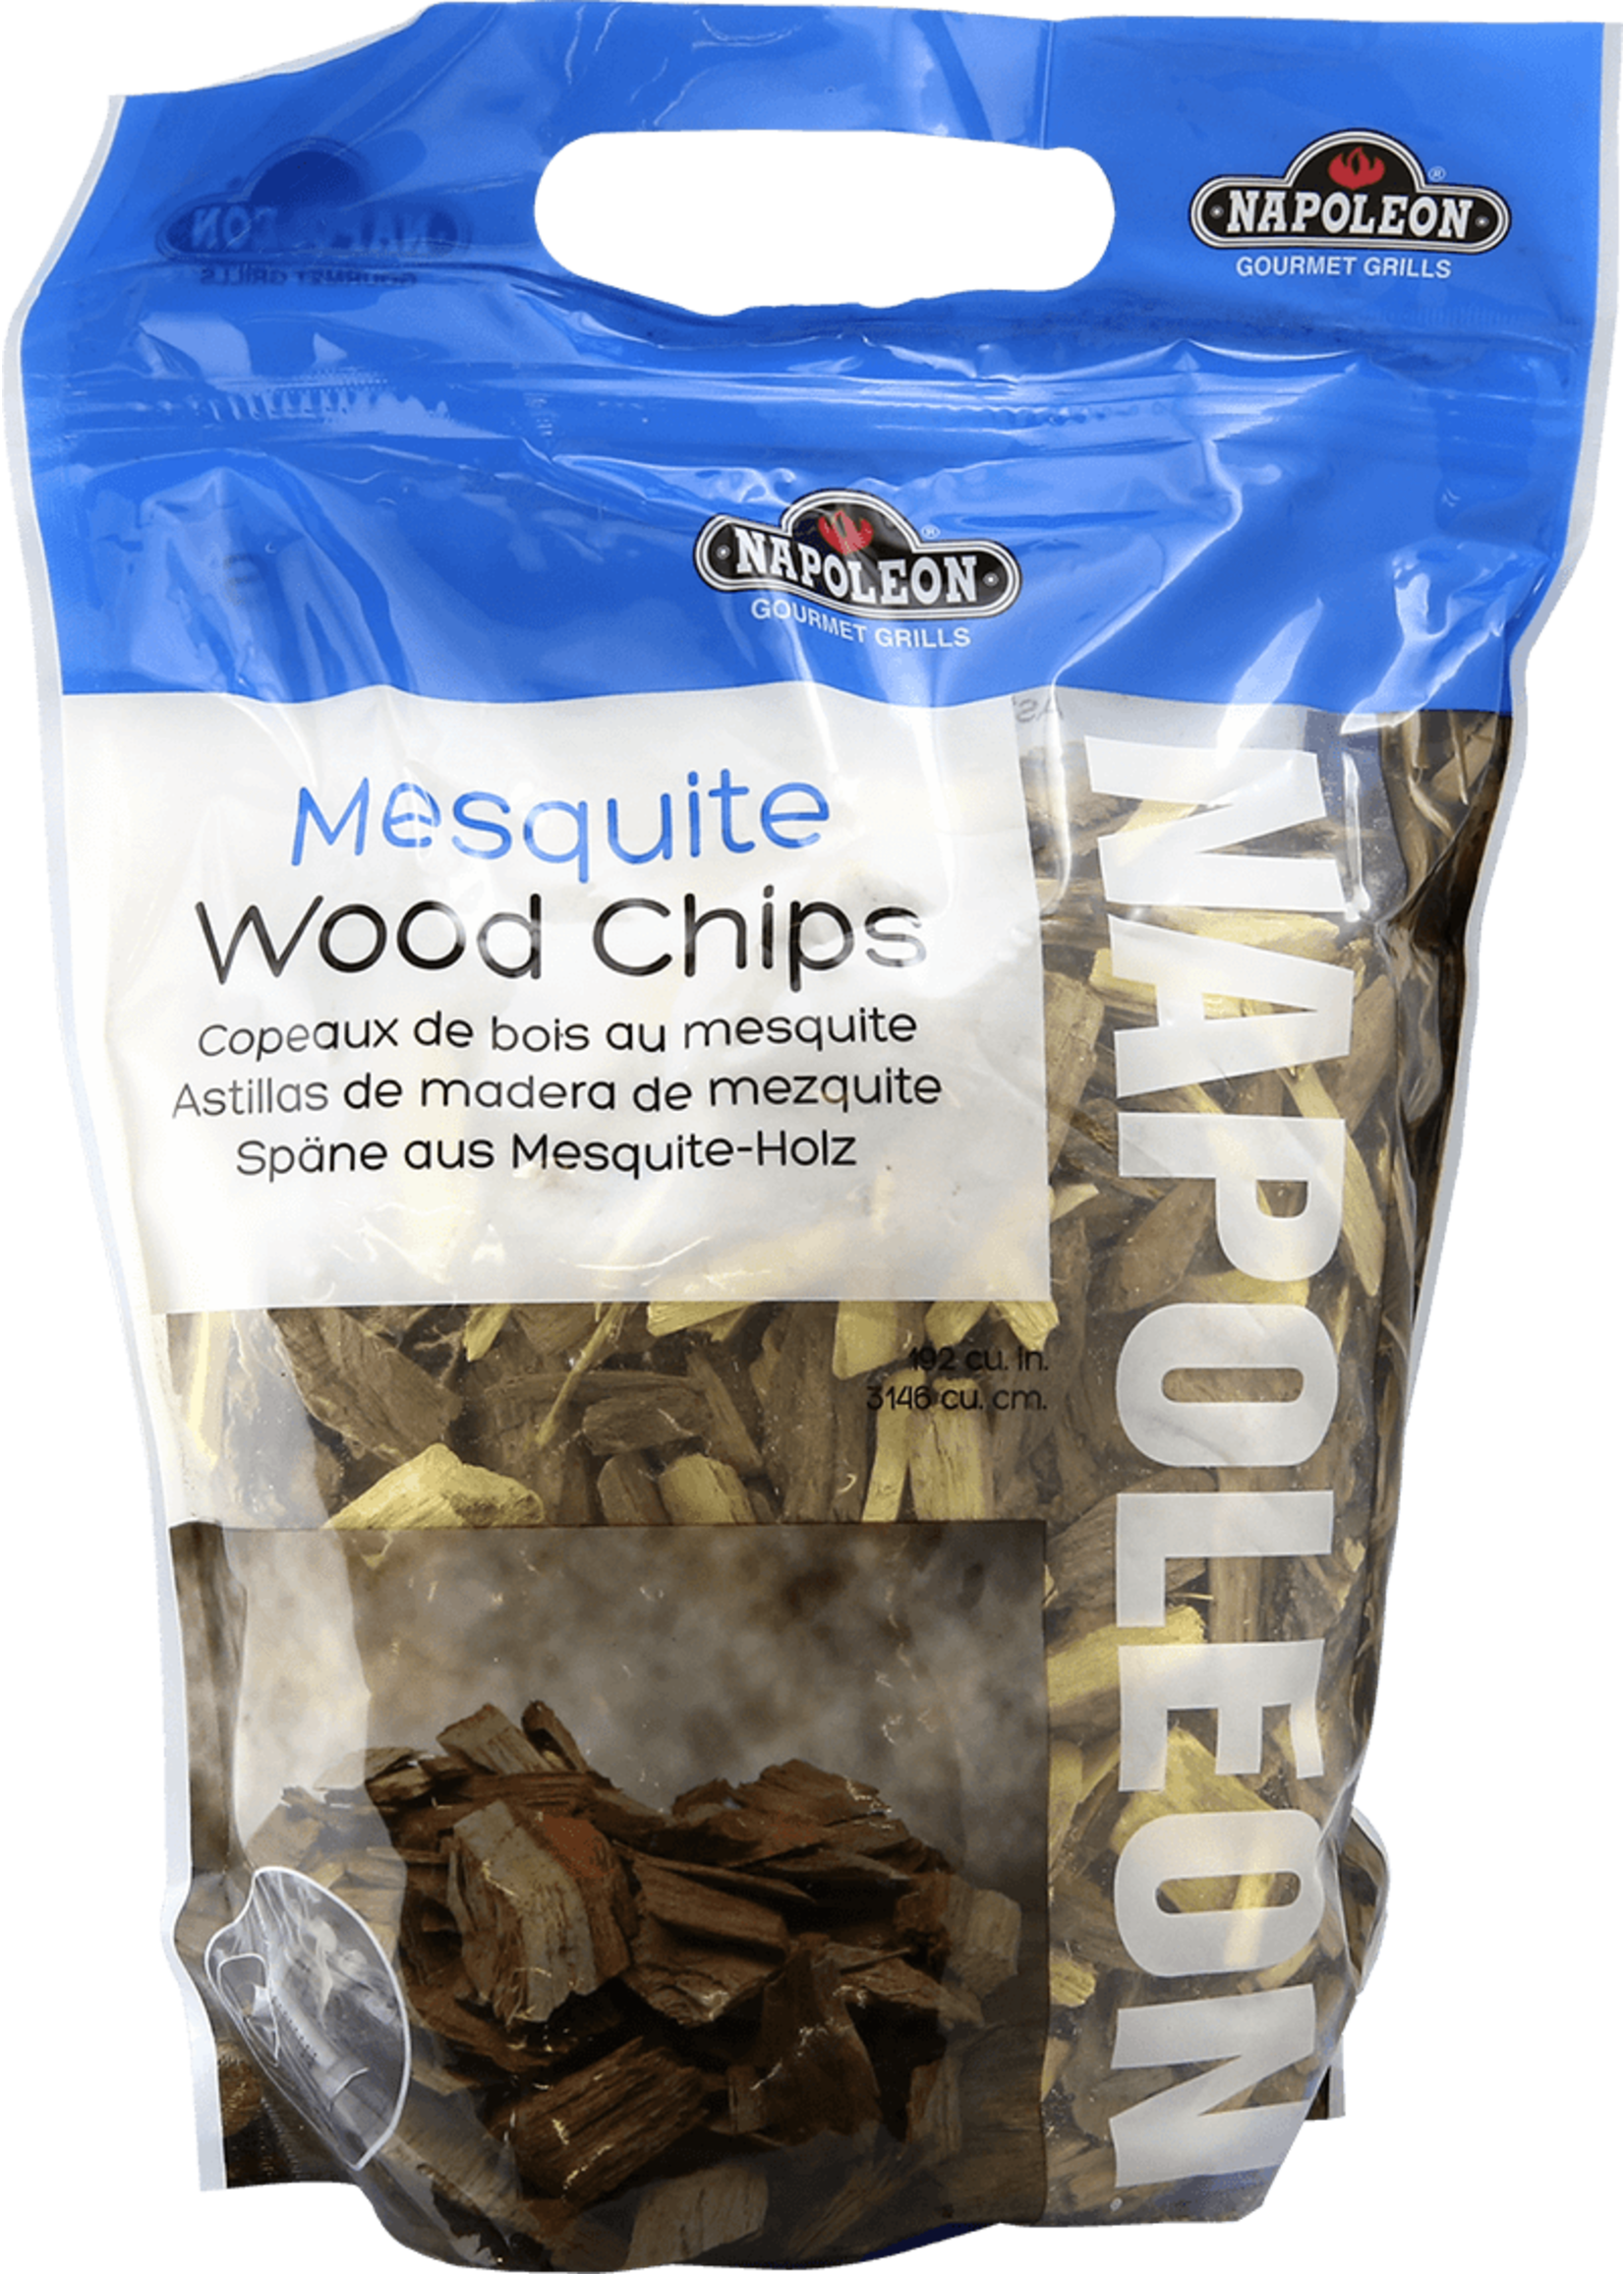 Napoleon Napoleon - Mesquite Wood Chips